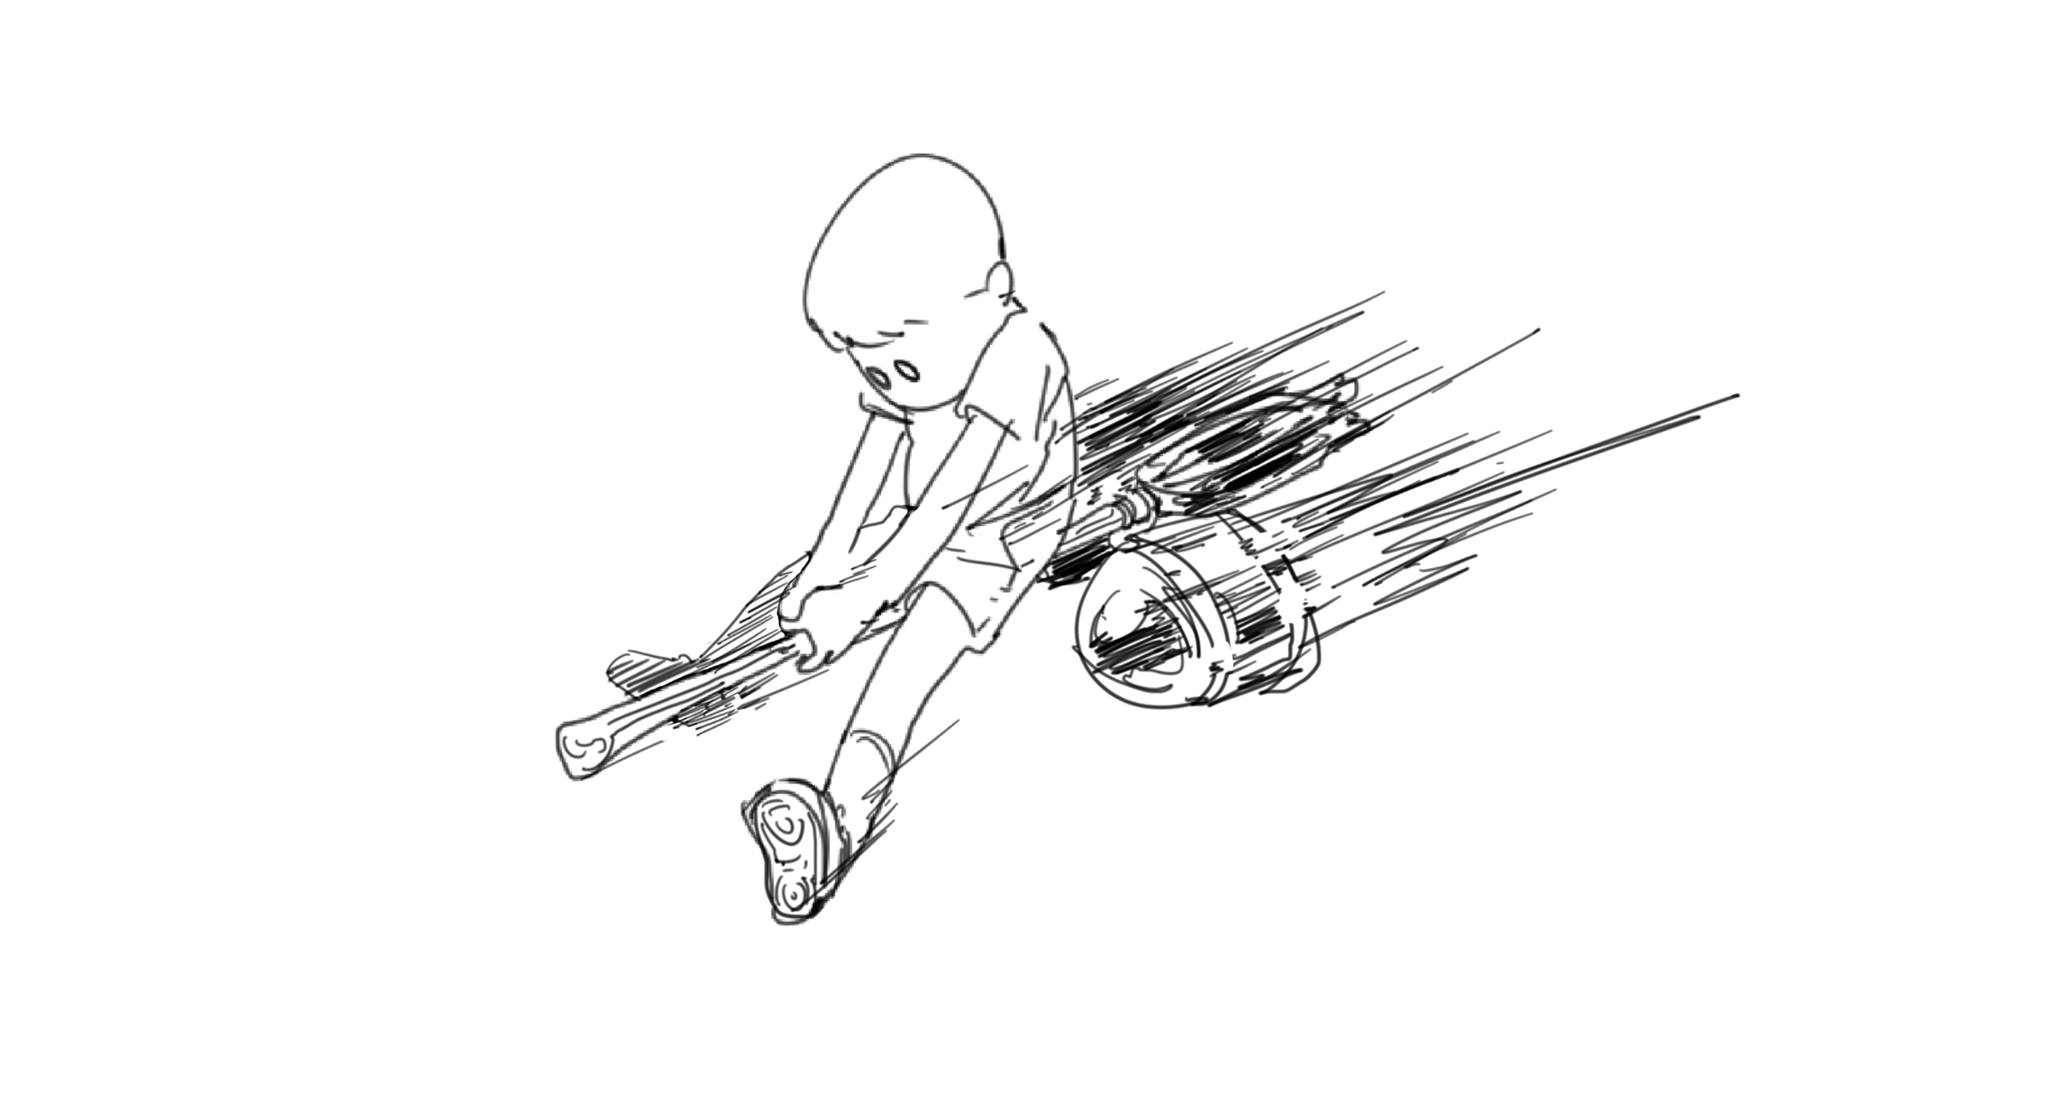 Ink illustration of a boy flying on a jet engine-powered broom